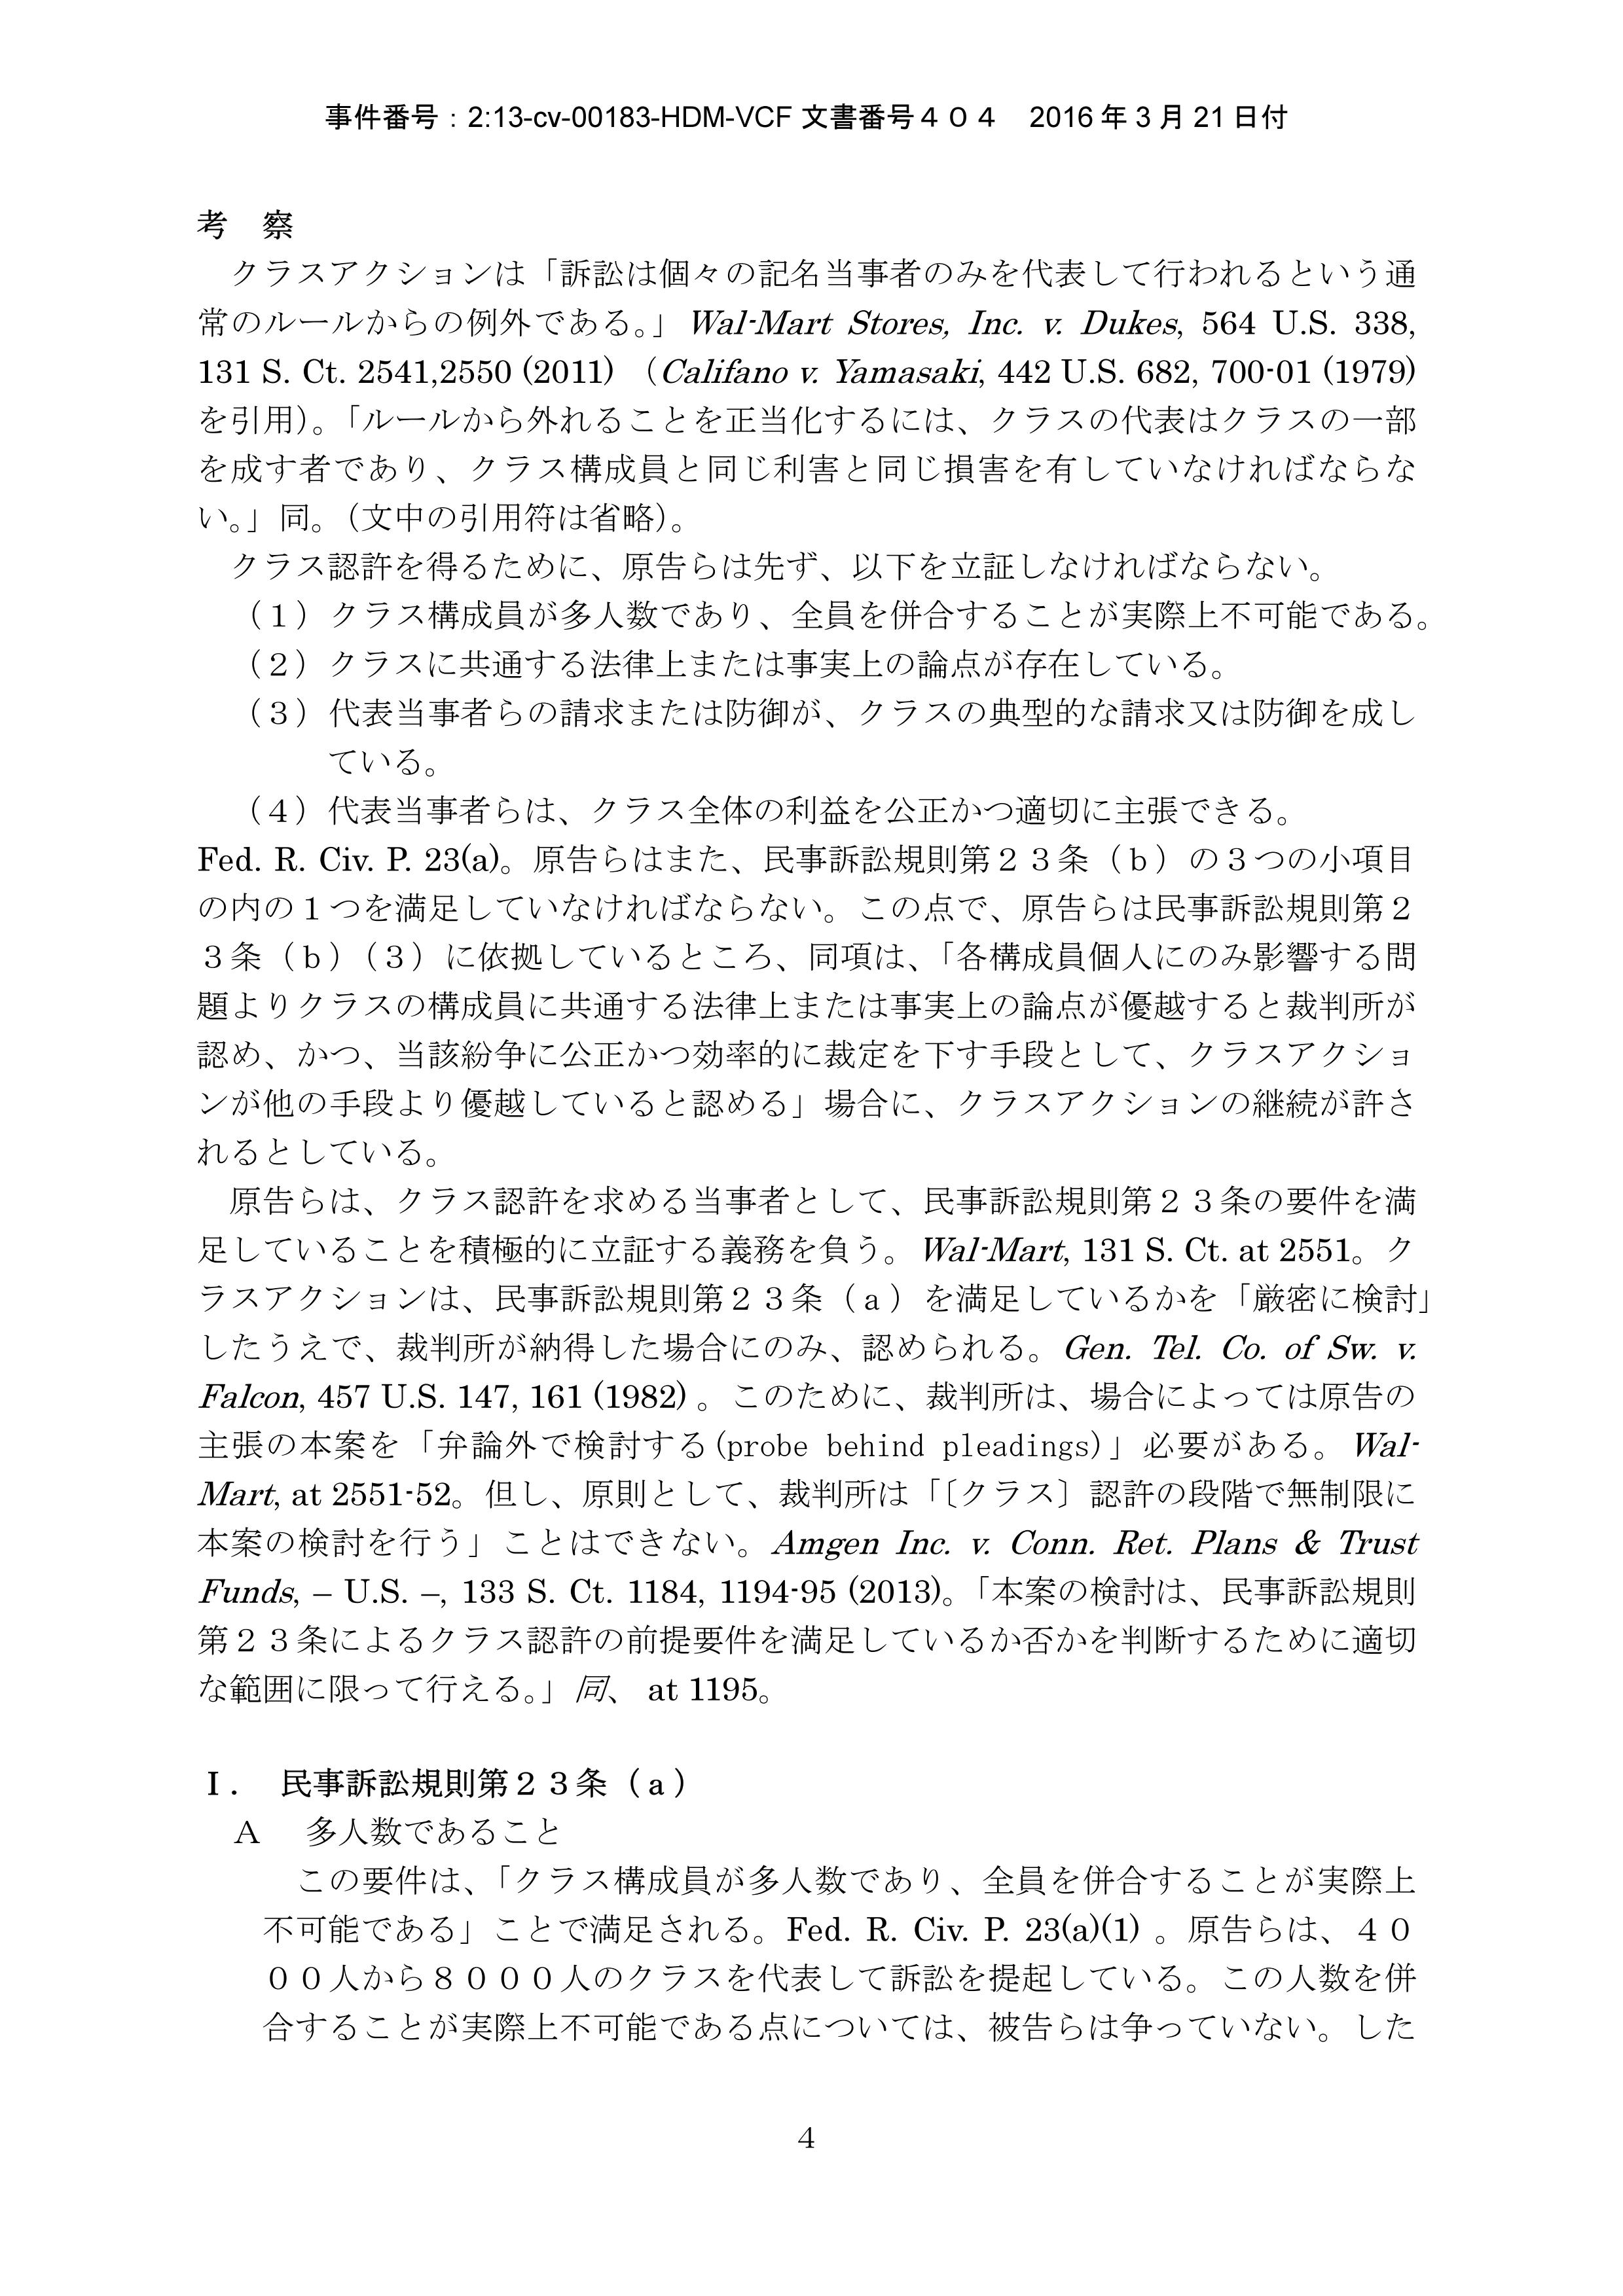 CA_Dkt 404_Order Granting Class Certification_Japanese translation_04